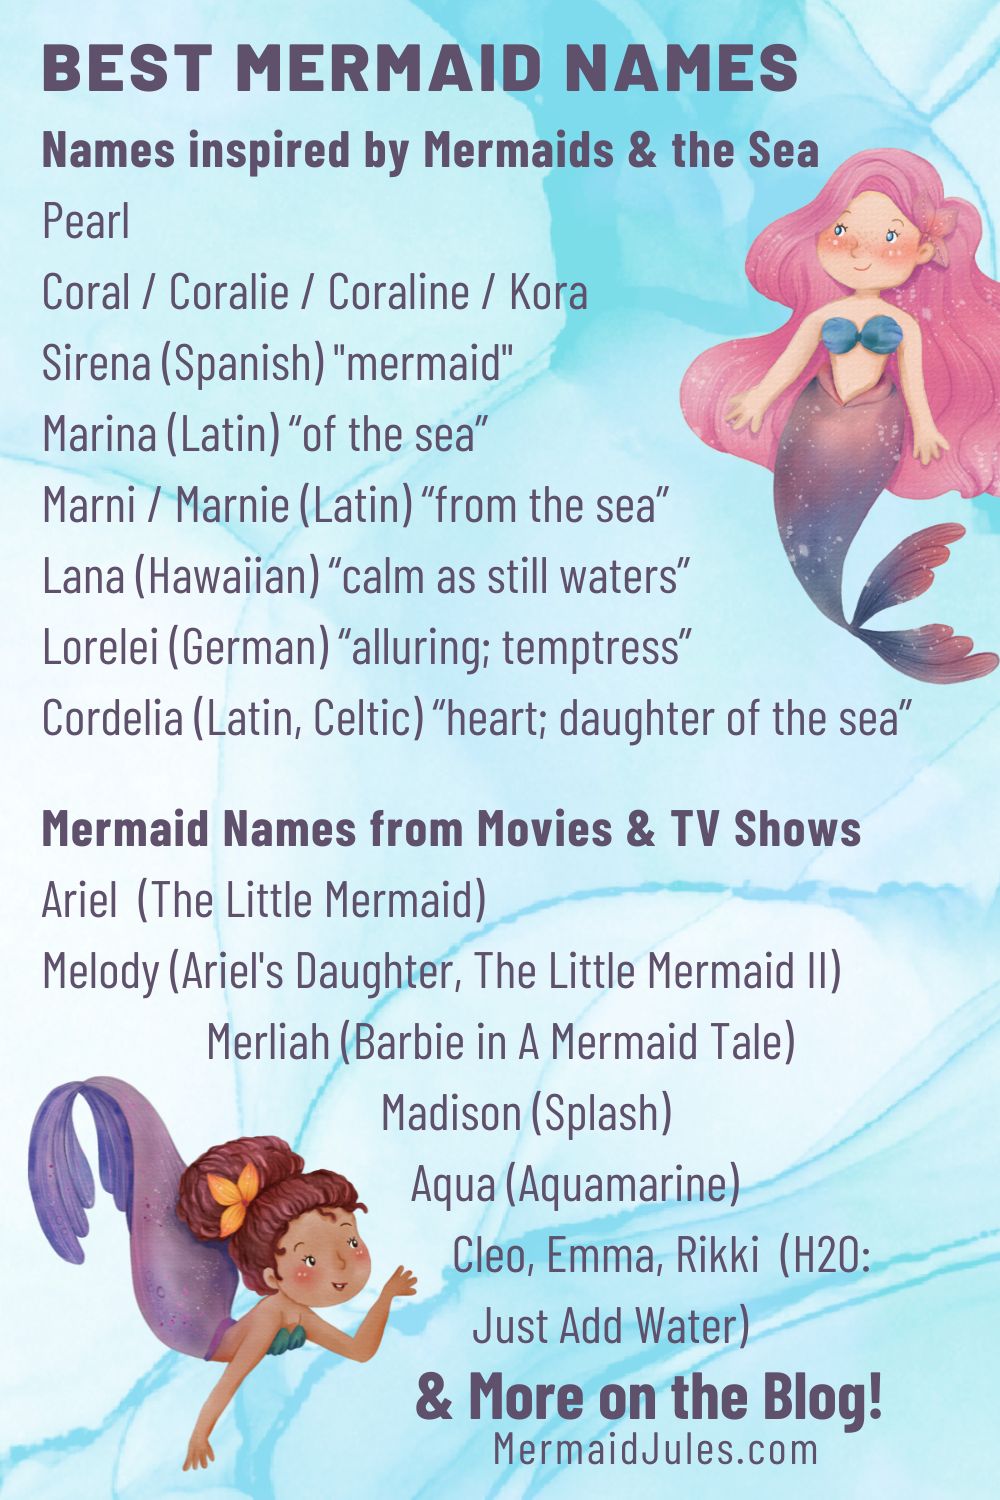 Best Mermaid Names related to water